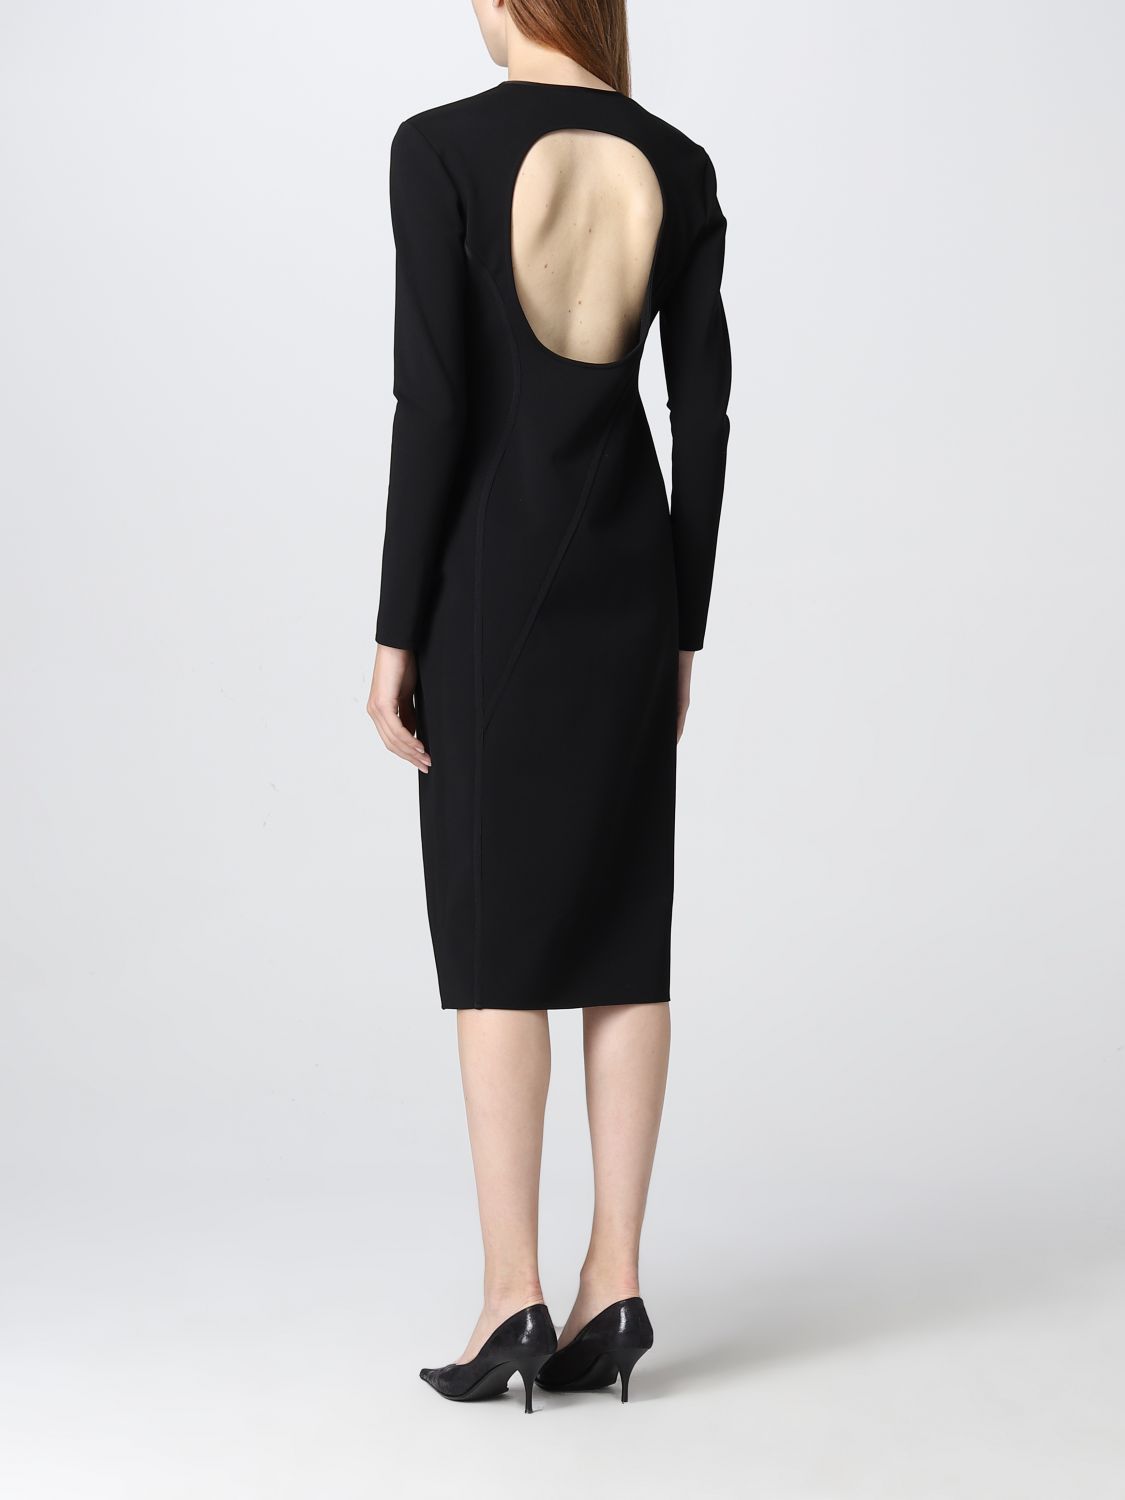 Dress Tom Ford: Tom Ford dress for woman black 2